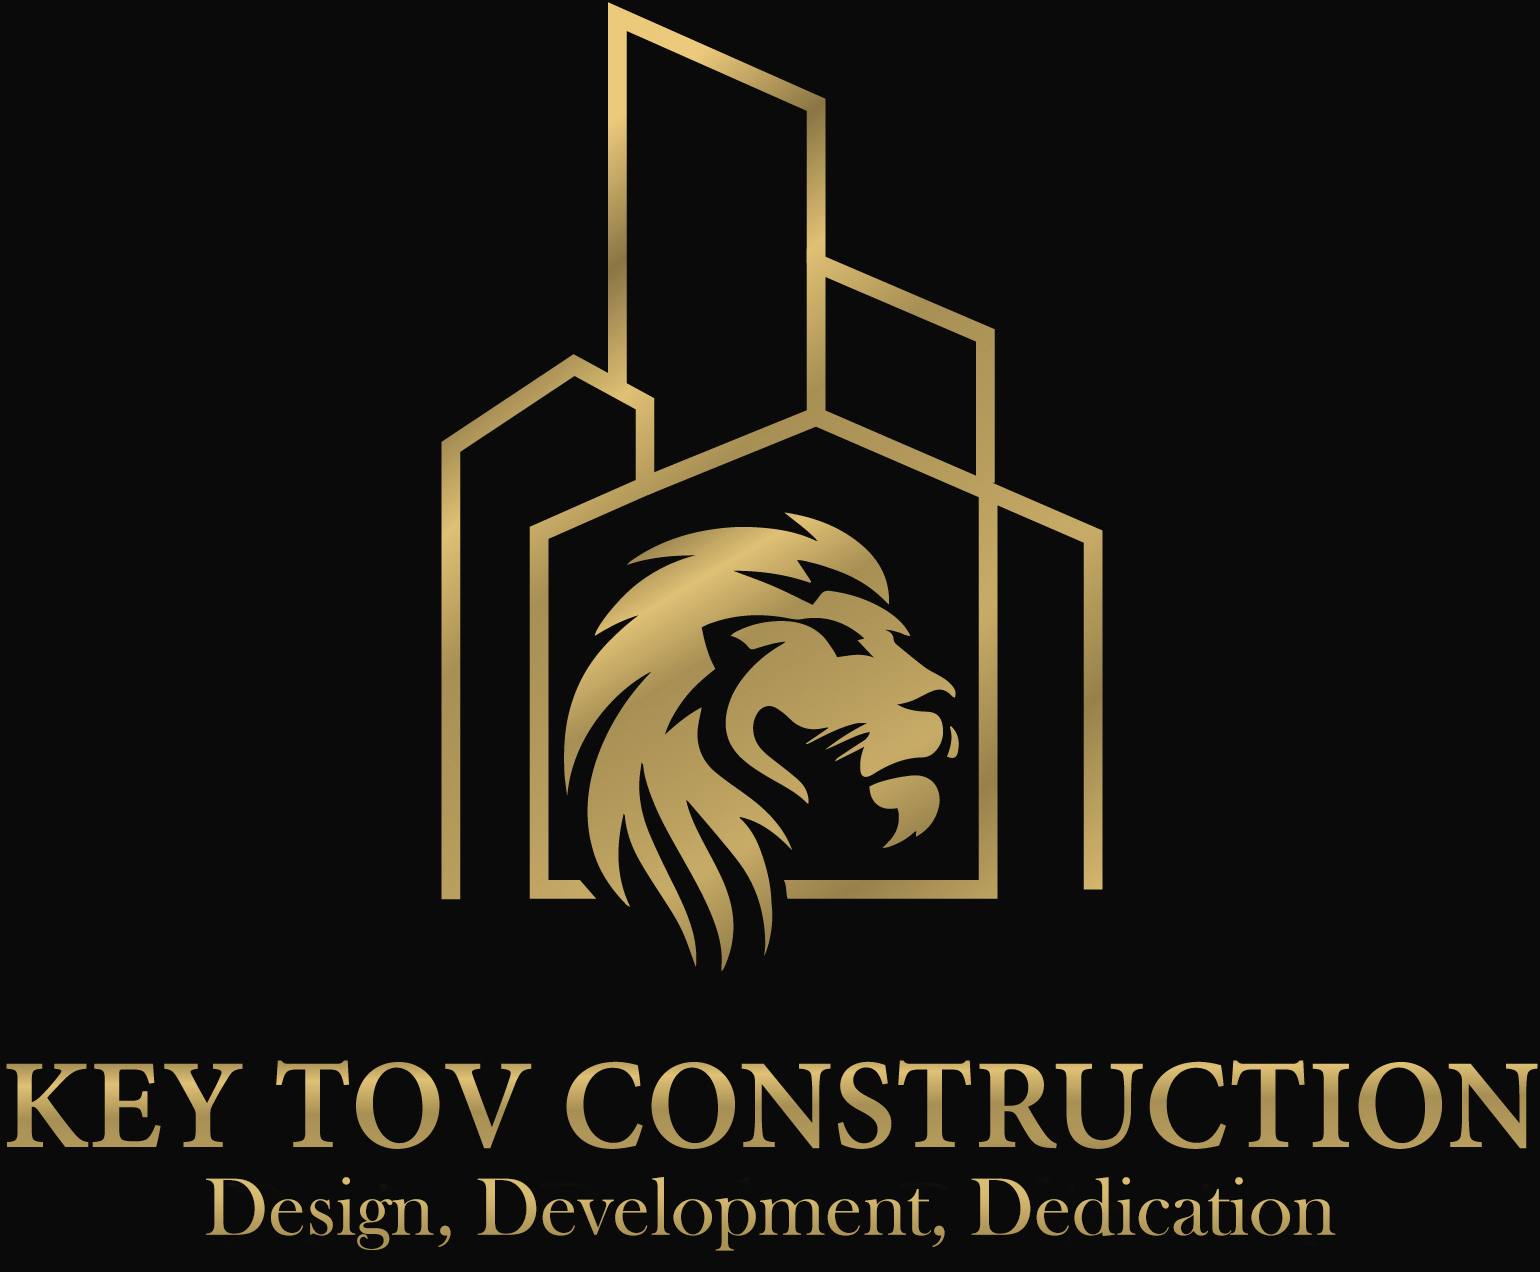 Key Tov Construction